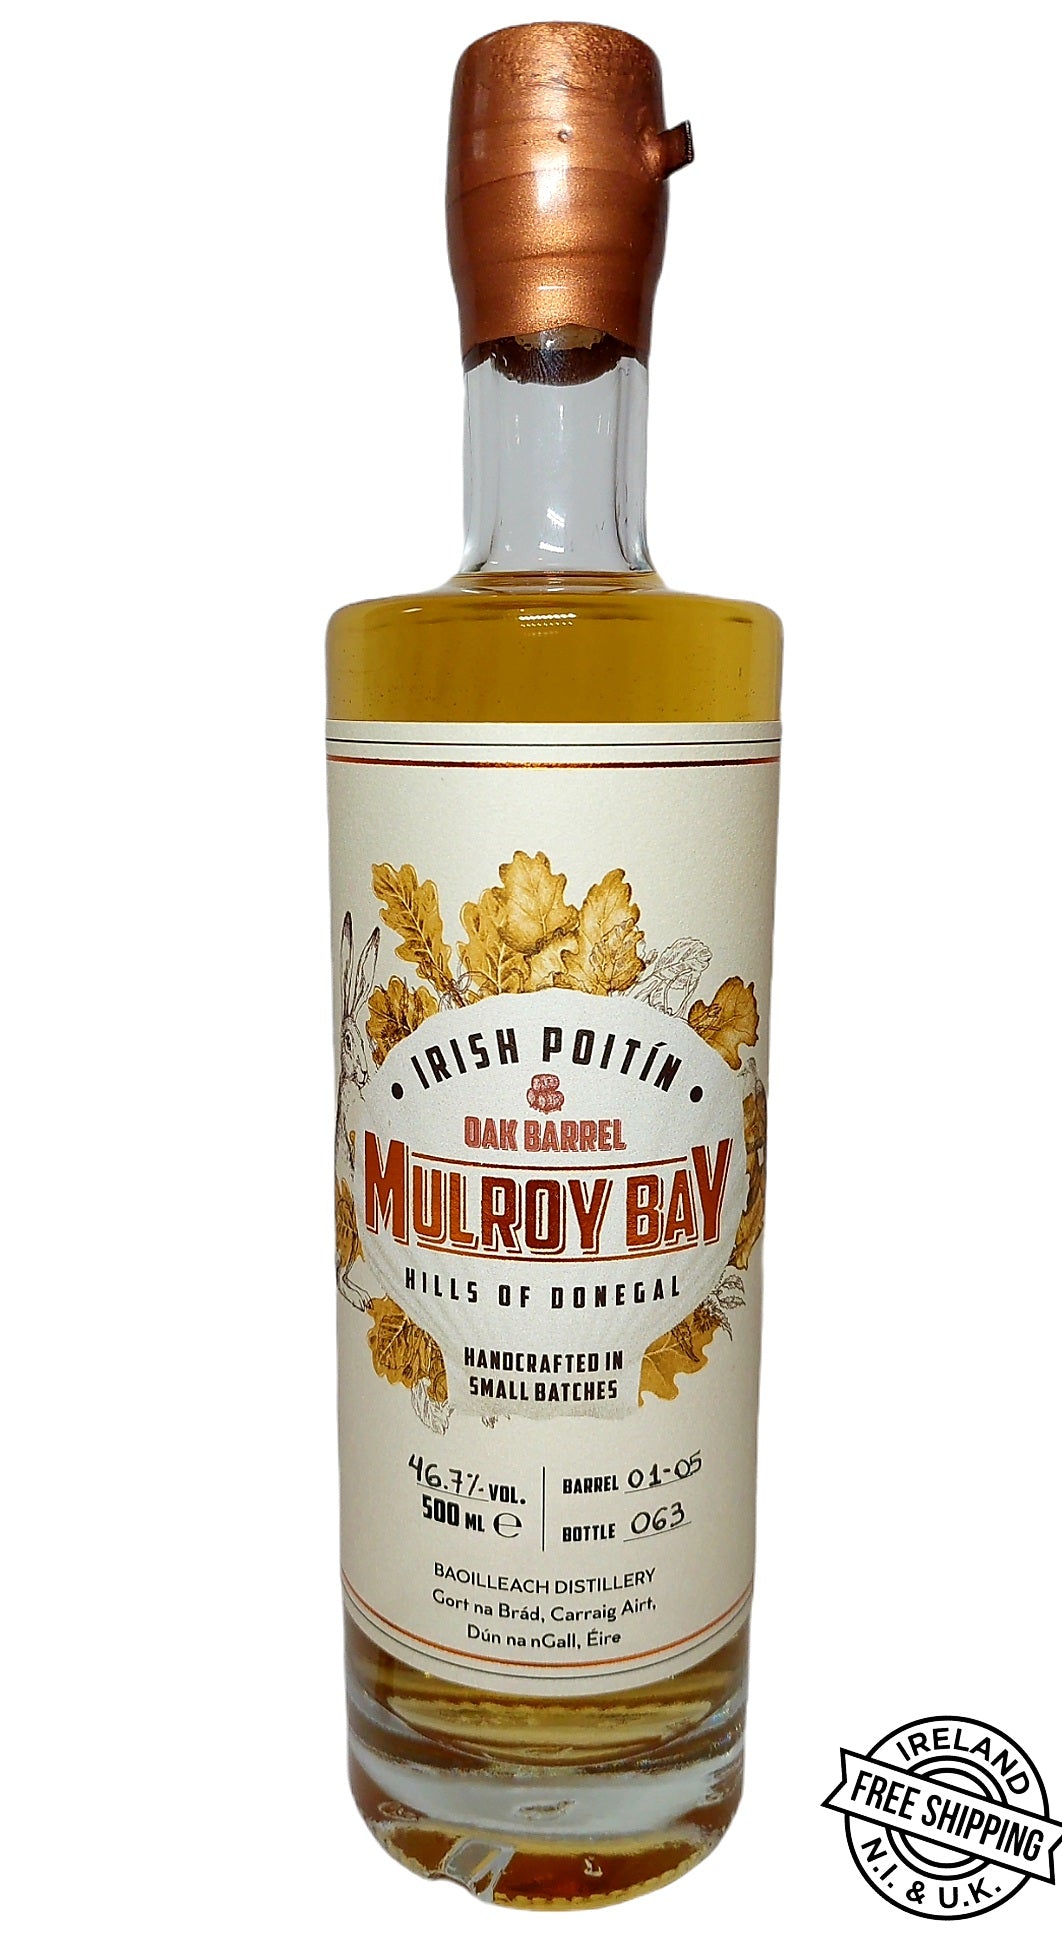 Mulroy Bay - Irish Poitín 46.5% - Oak Barrel Rested - 500ml